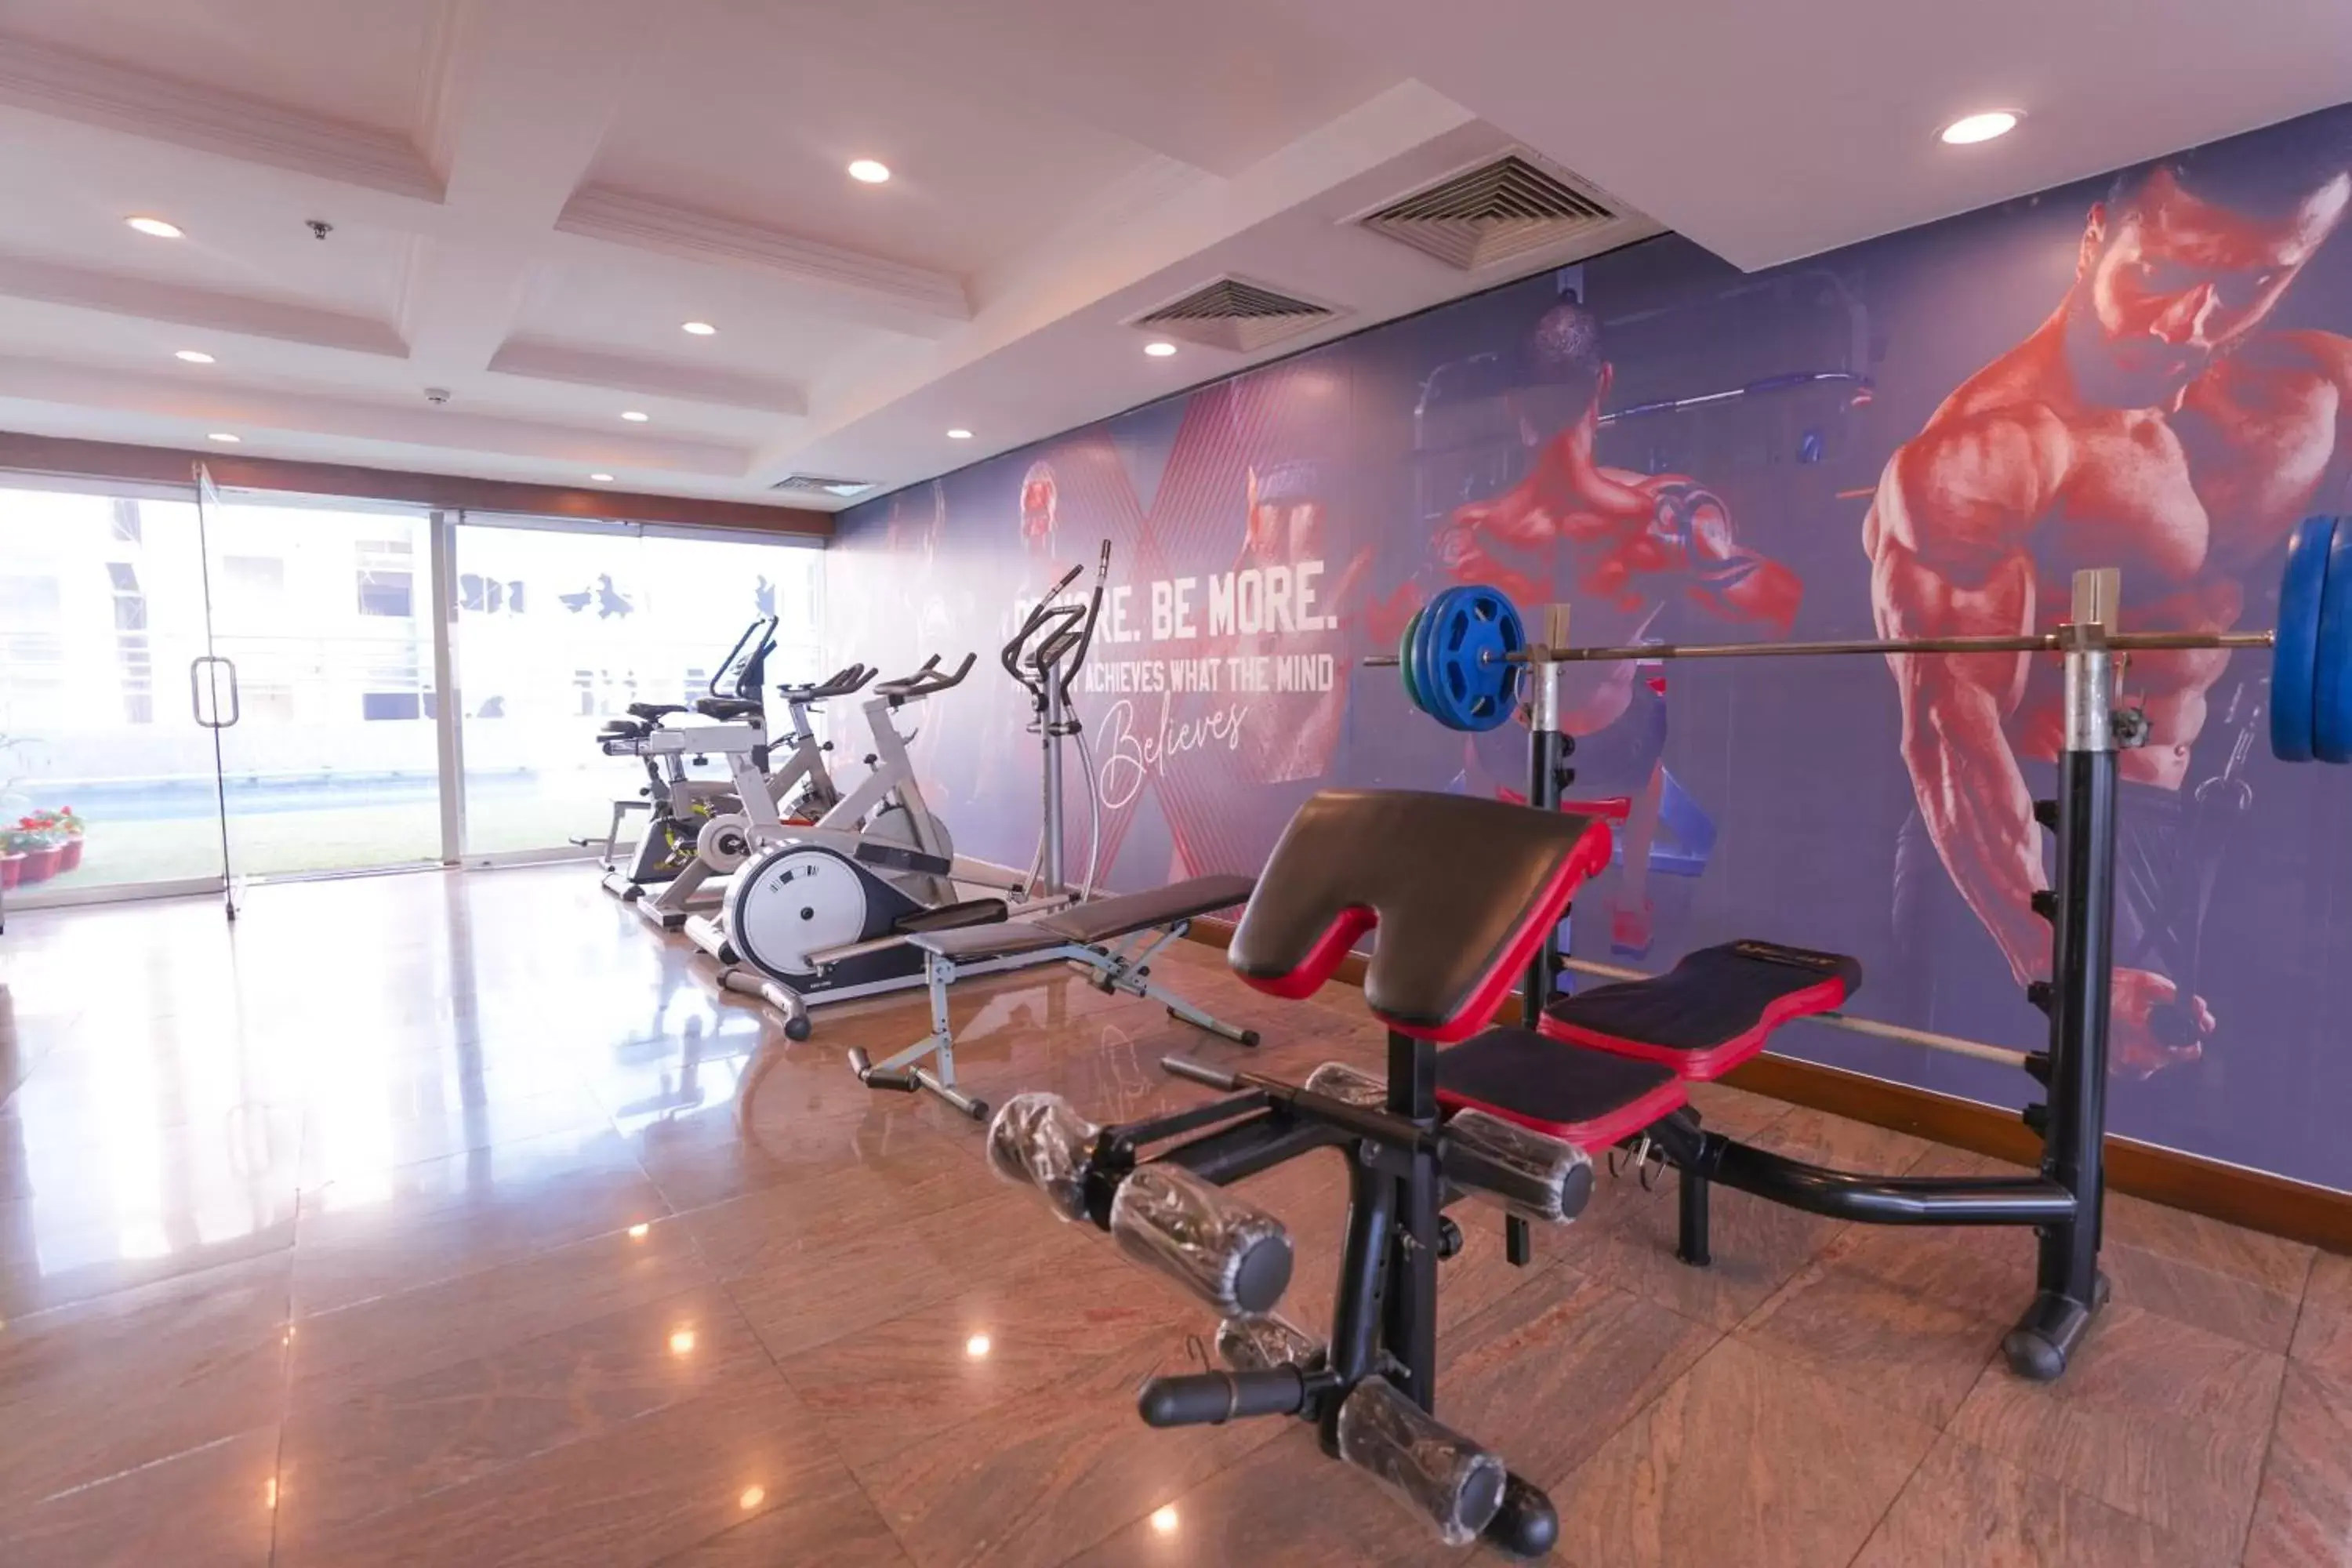 Fitness centre/facilities, Fitness Center/Facilities in Hotel Sarina